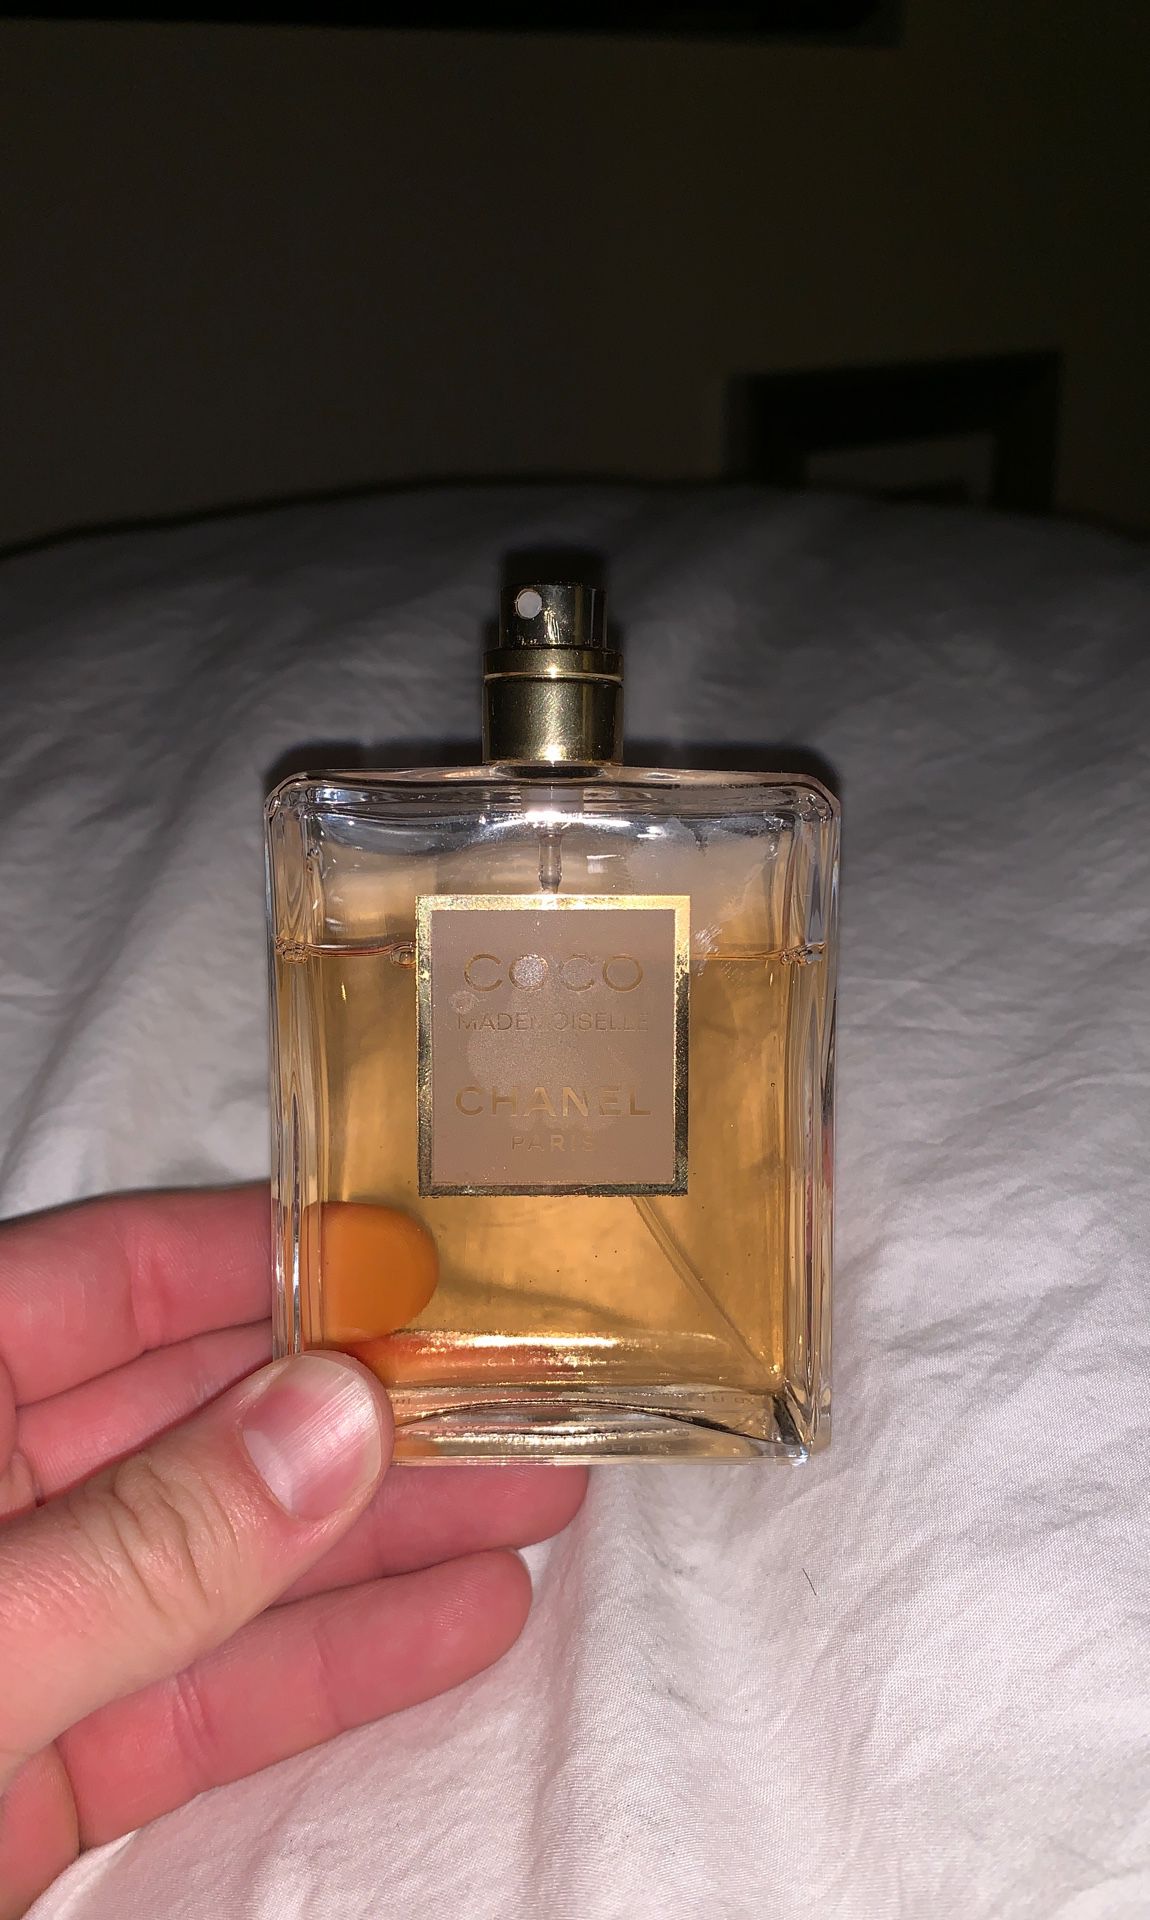 chanel female perfume